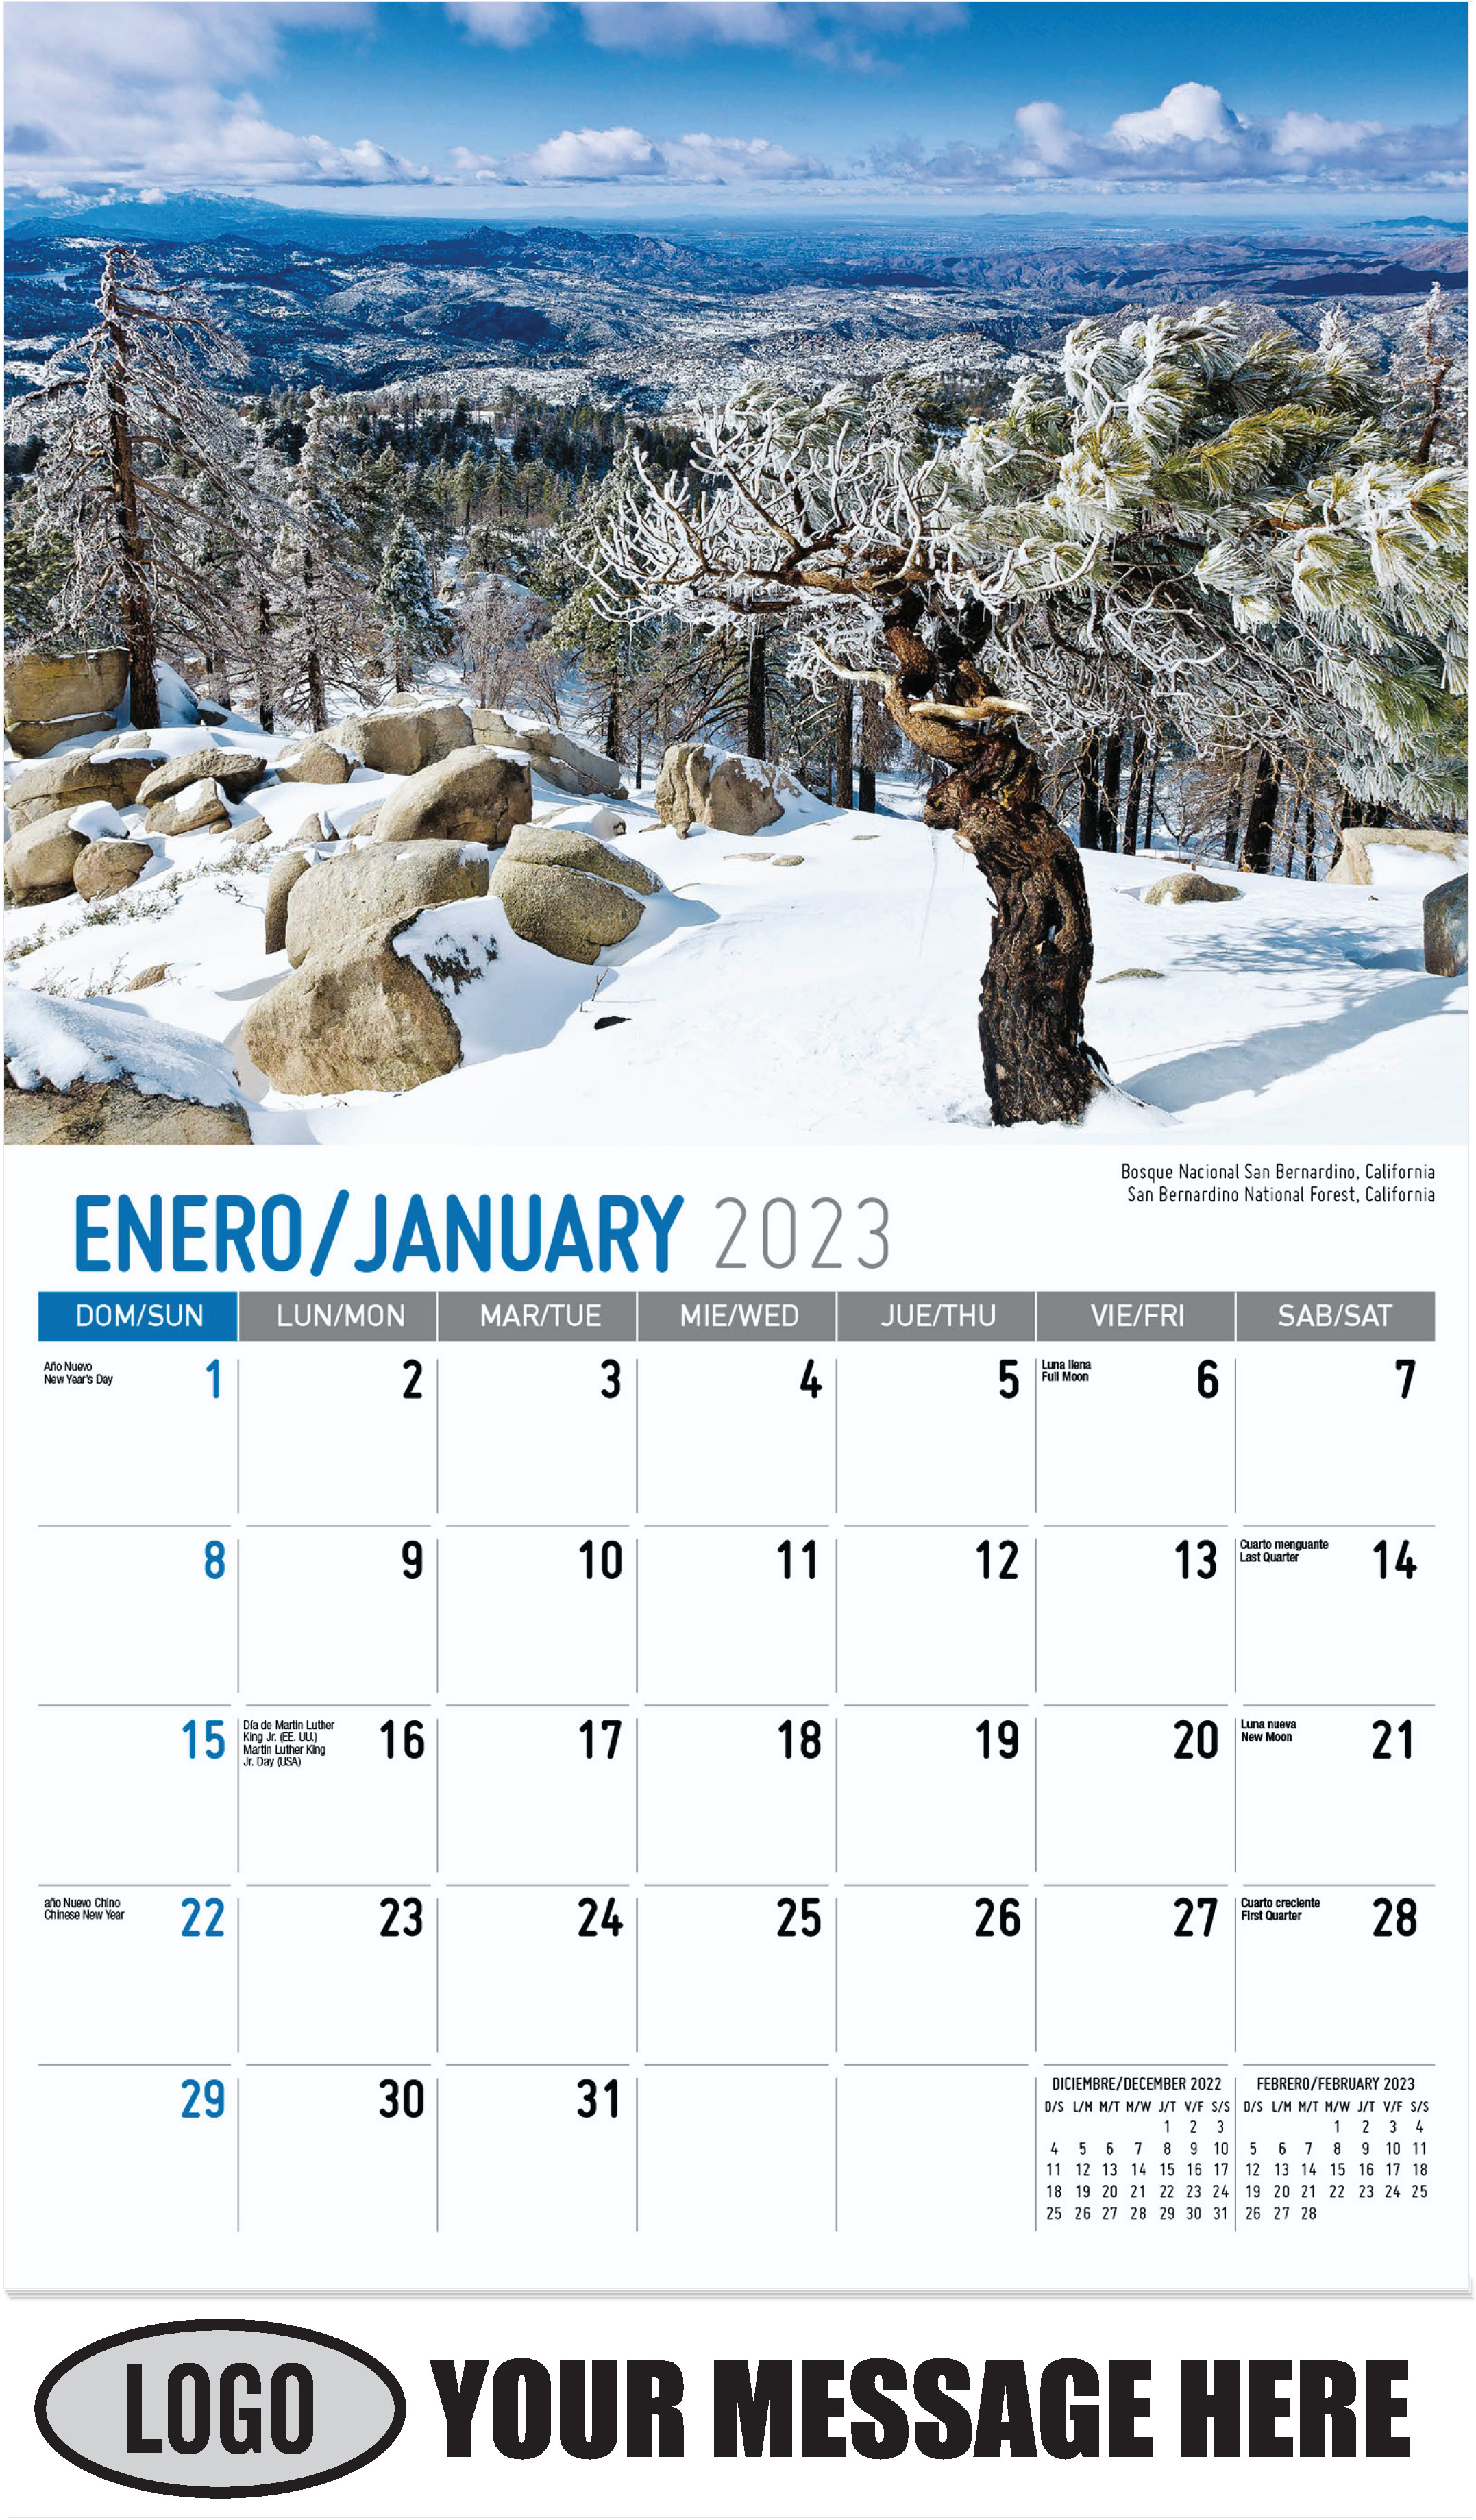 San Bernardino National Forest, California - January - Scenes of America (Spanish-English bilingual) 2023 Promotional Calendar